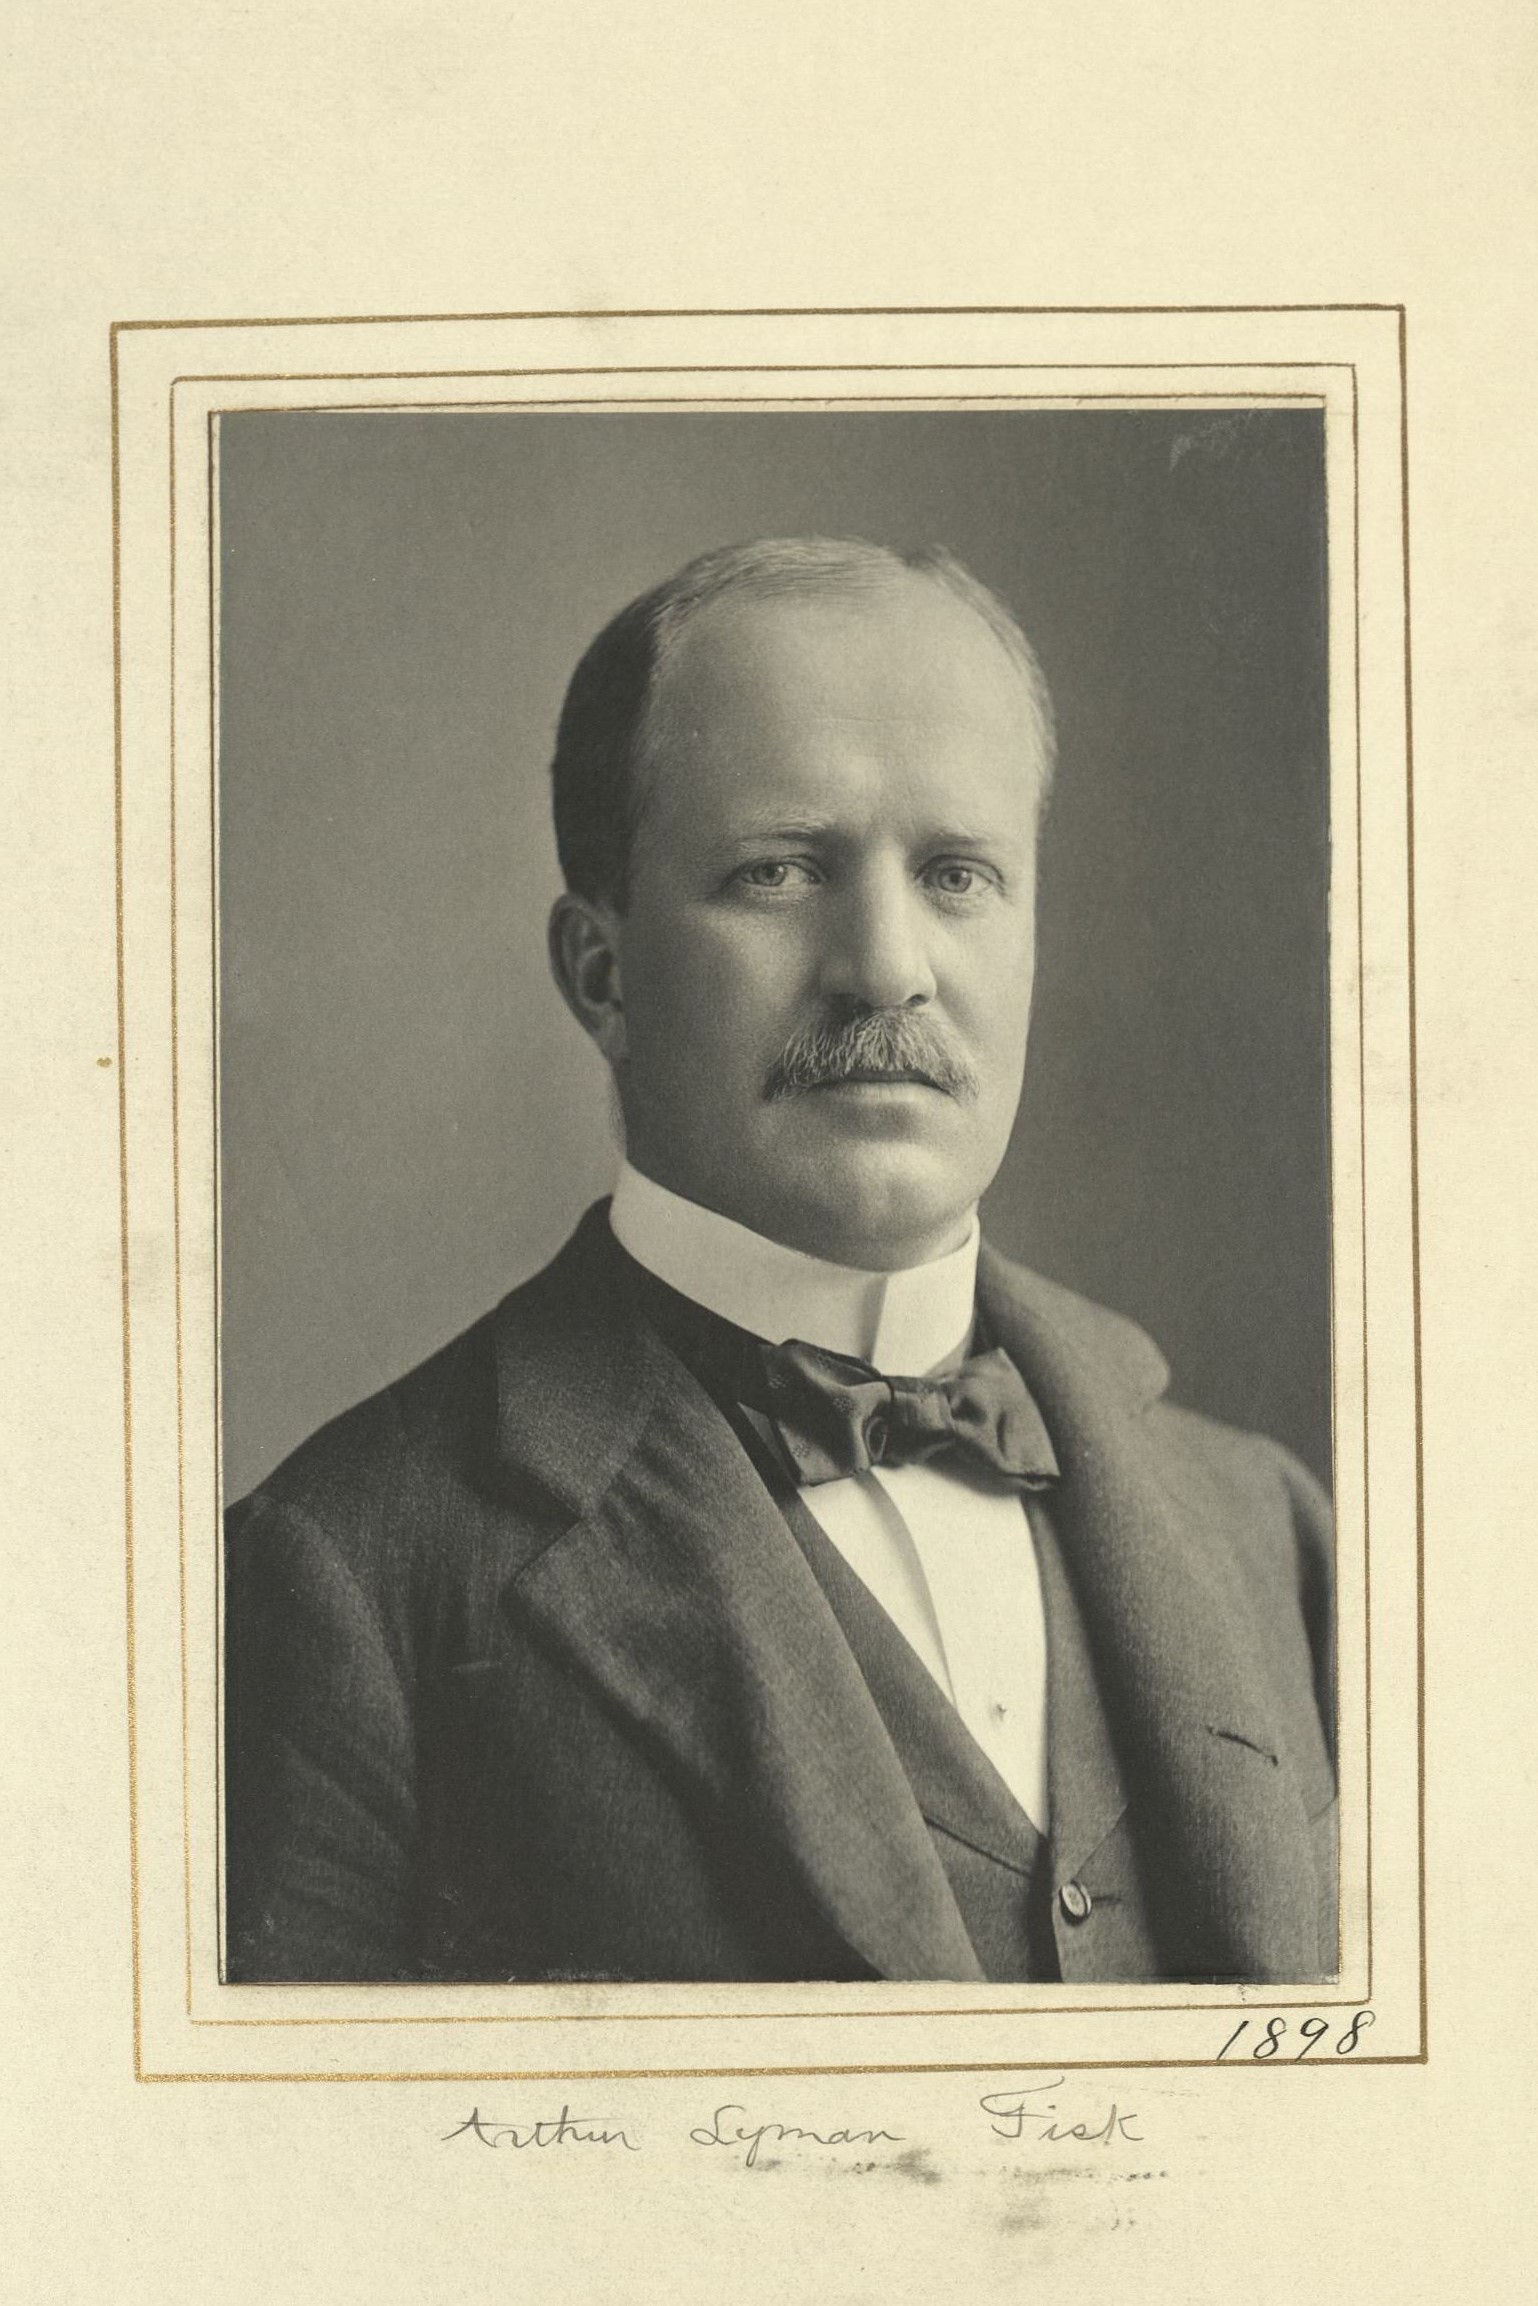 Member portrait of Arthur Lyman Fisk